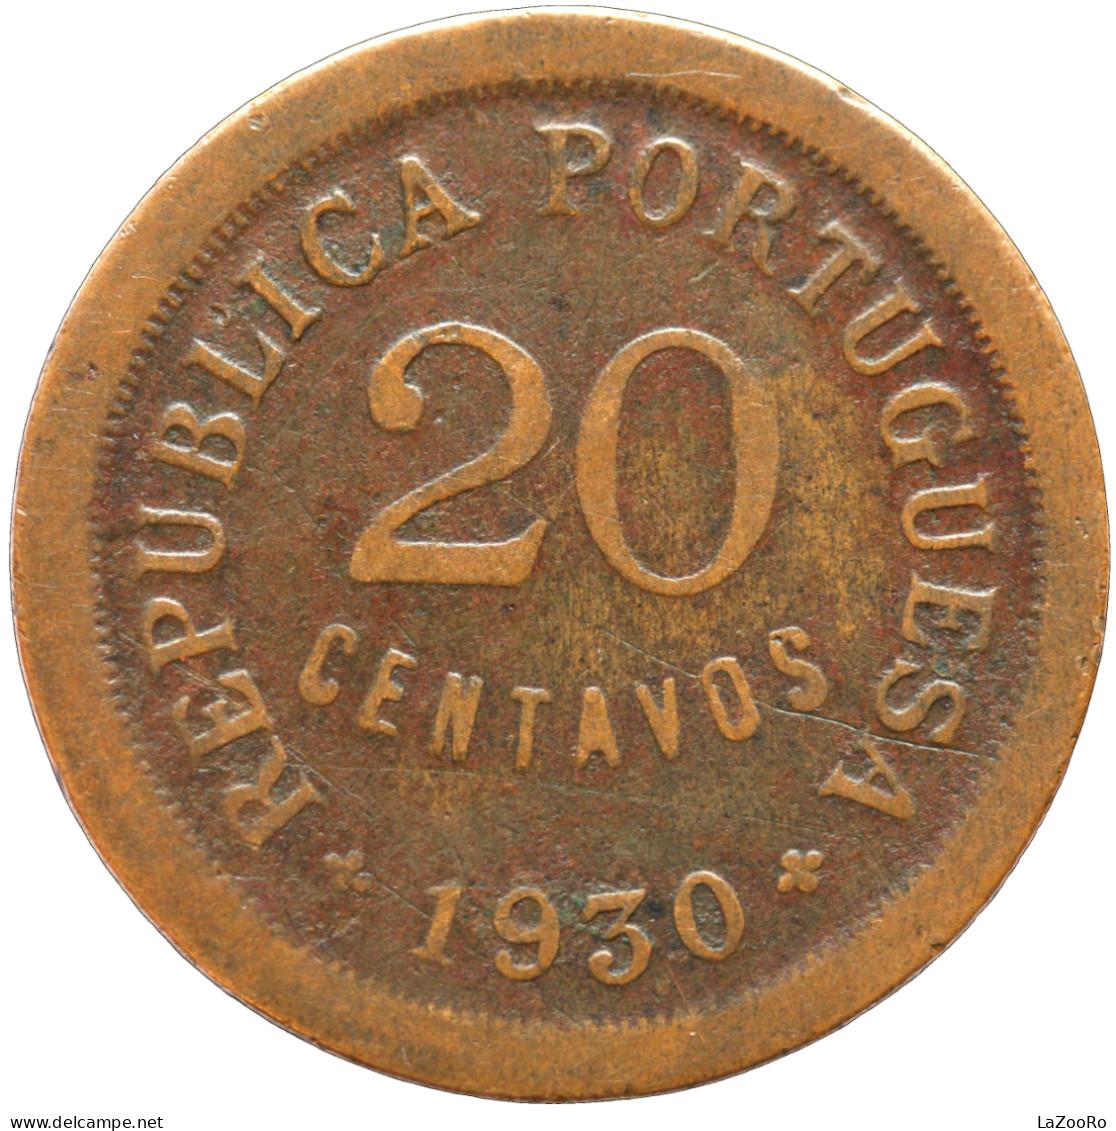 LaZooRo: Portuguese Cape Verde 20 Centavos 1930 VF - Capo Verde